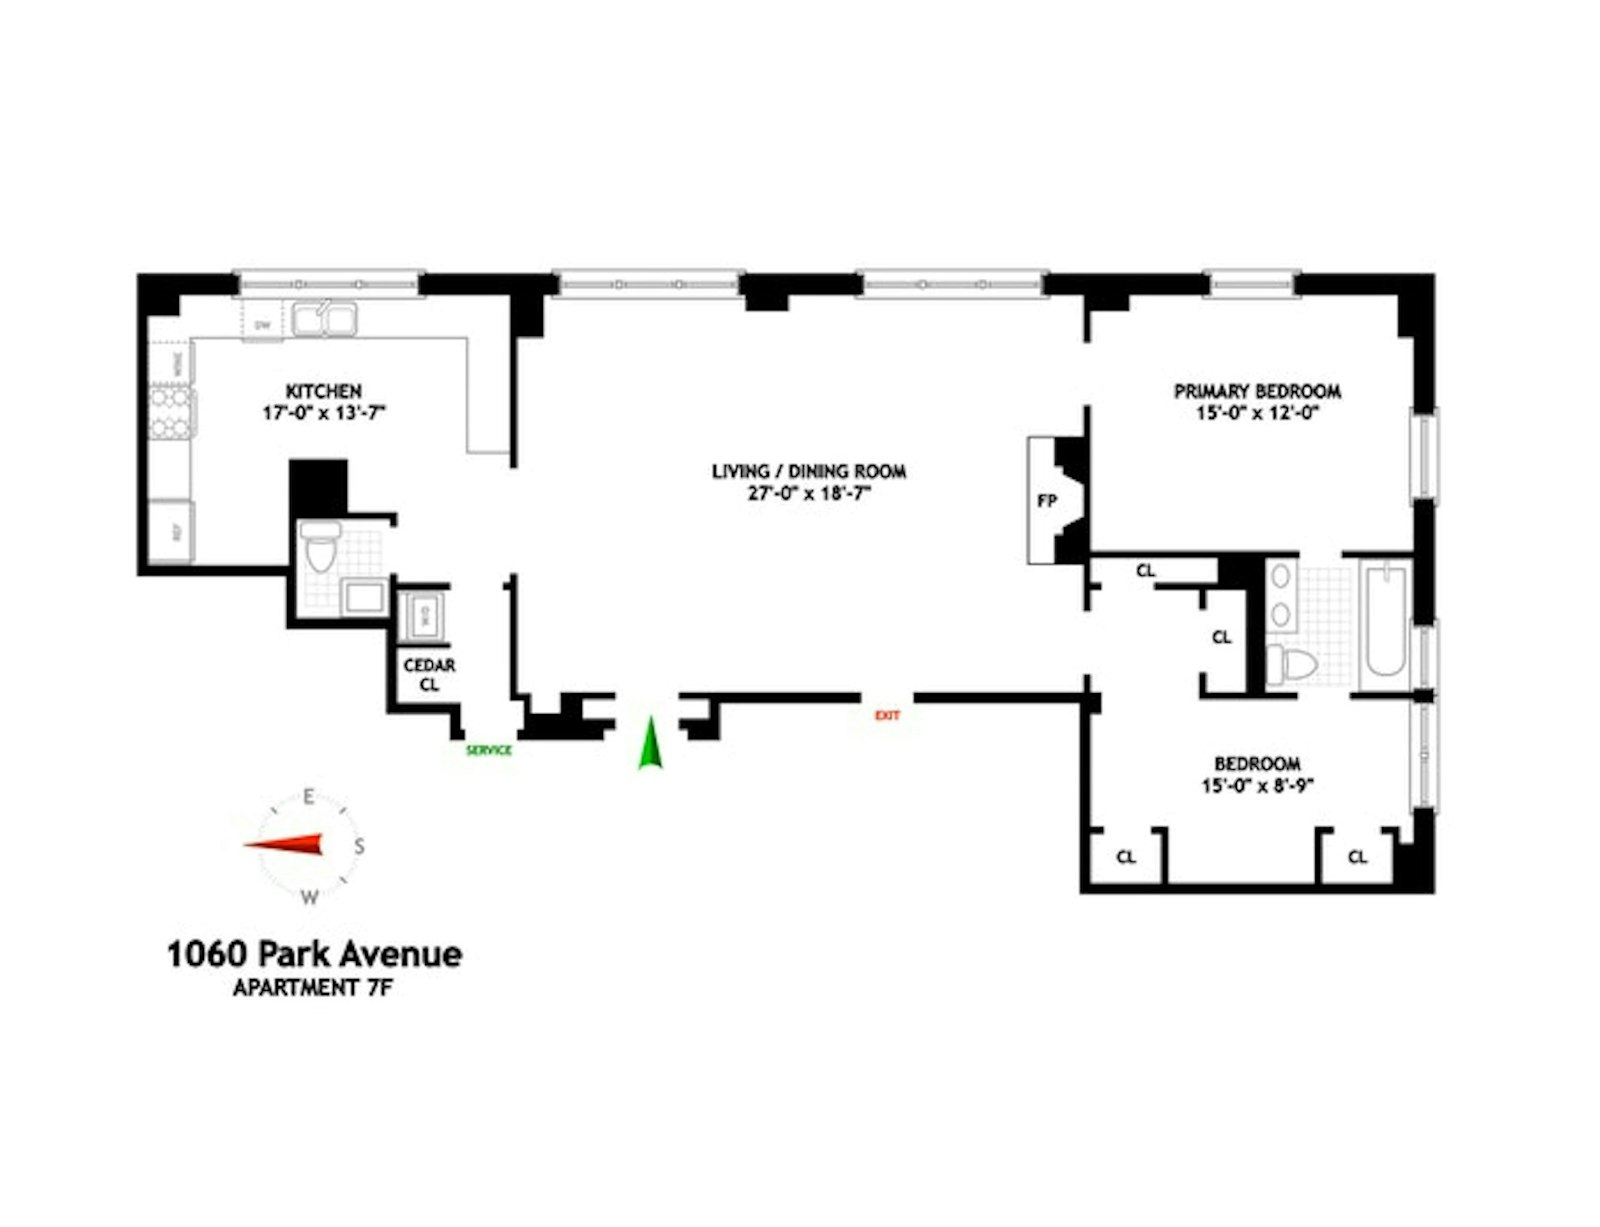 Floorplan for 1060 Park Avenue, 7F